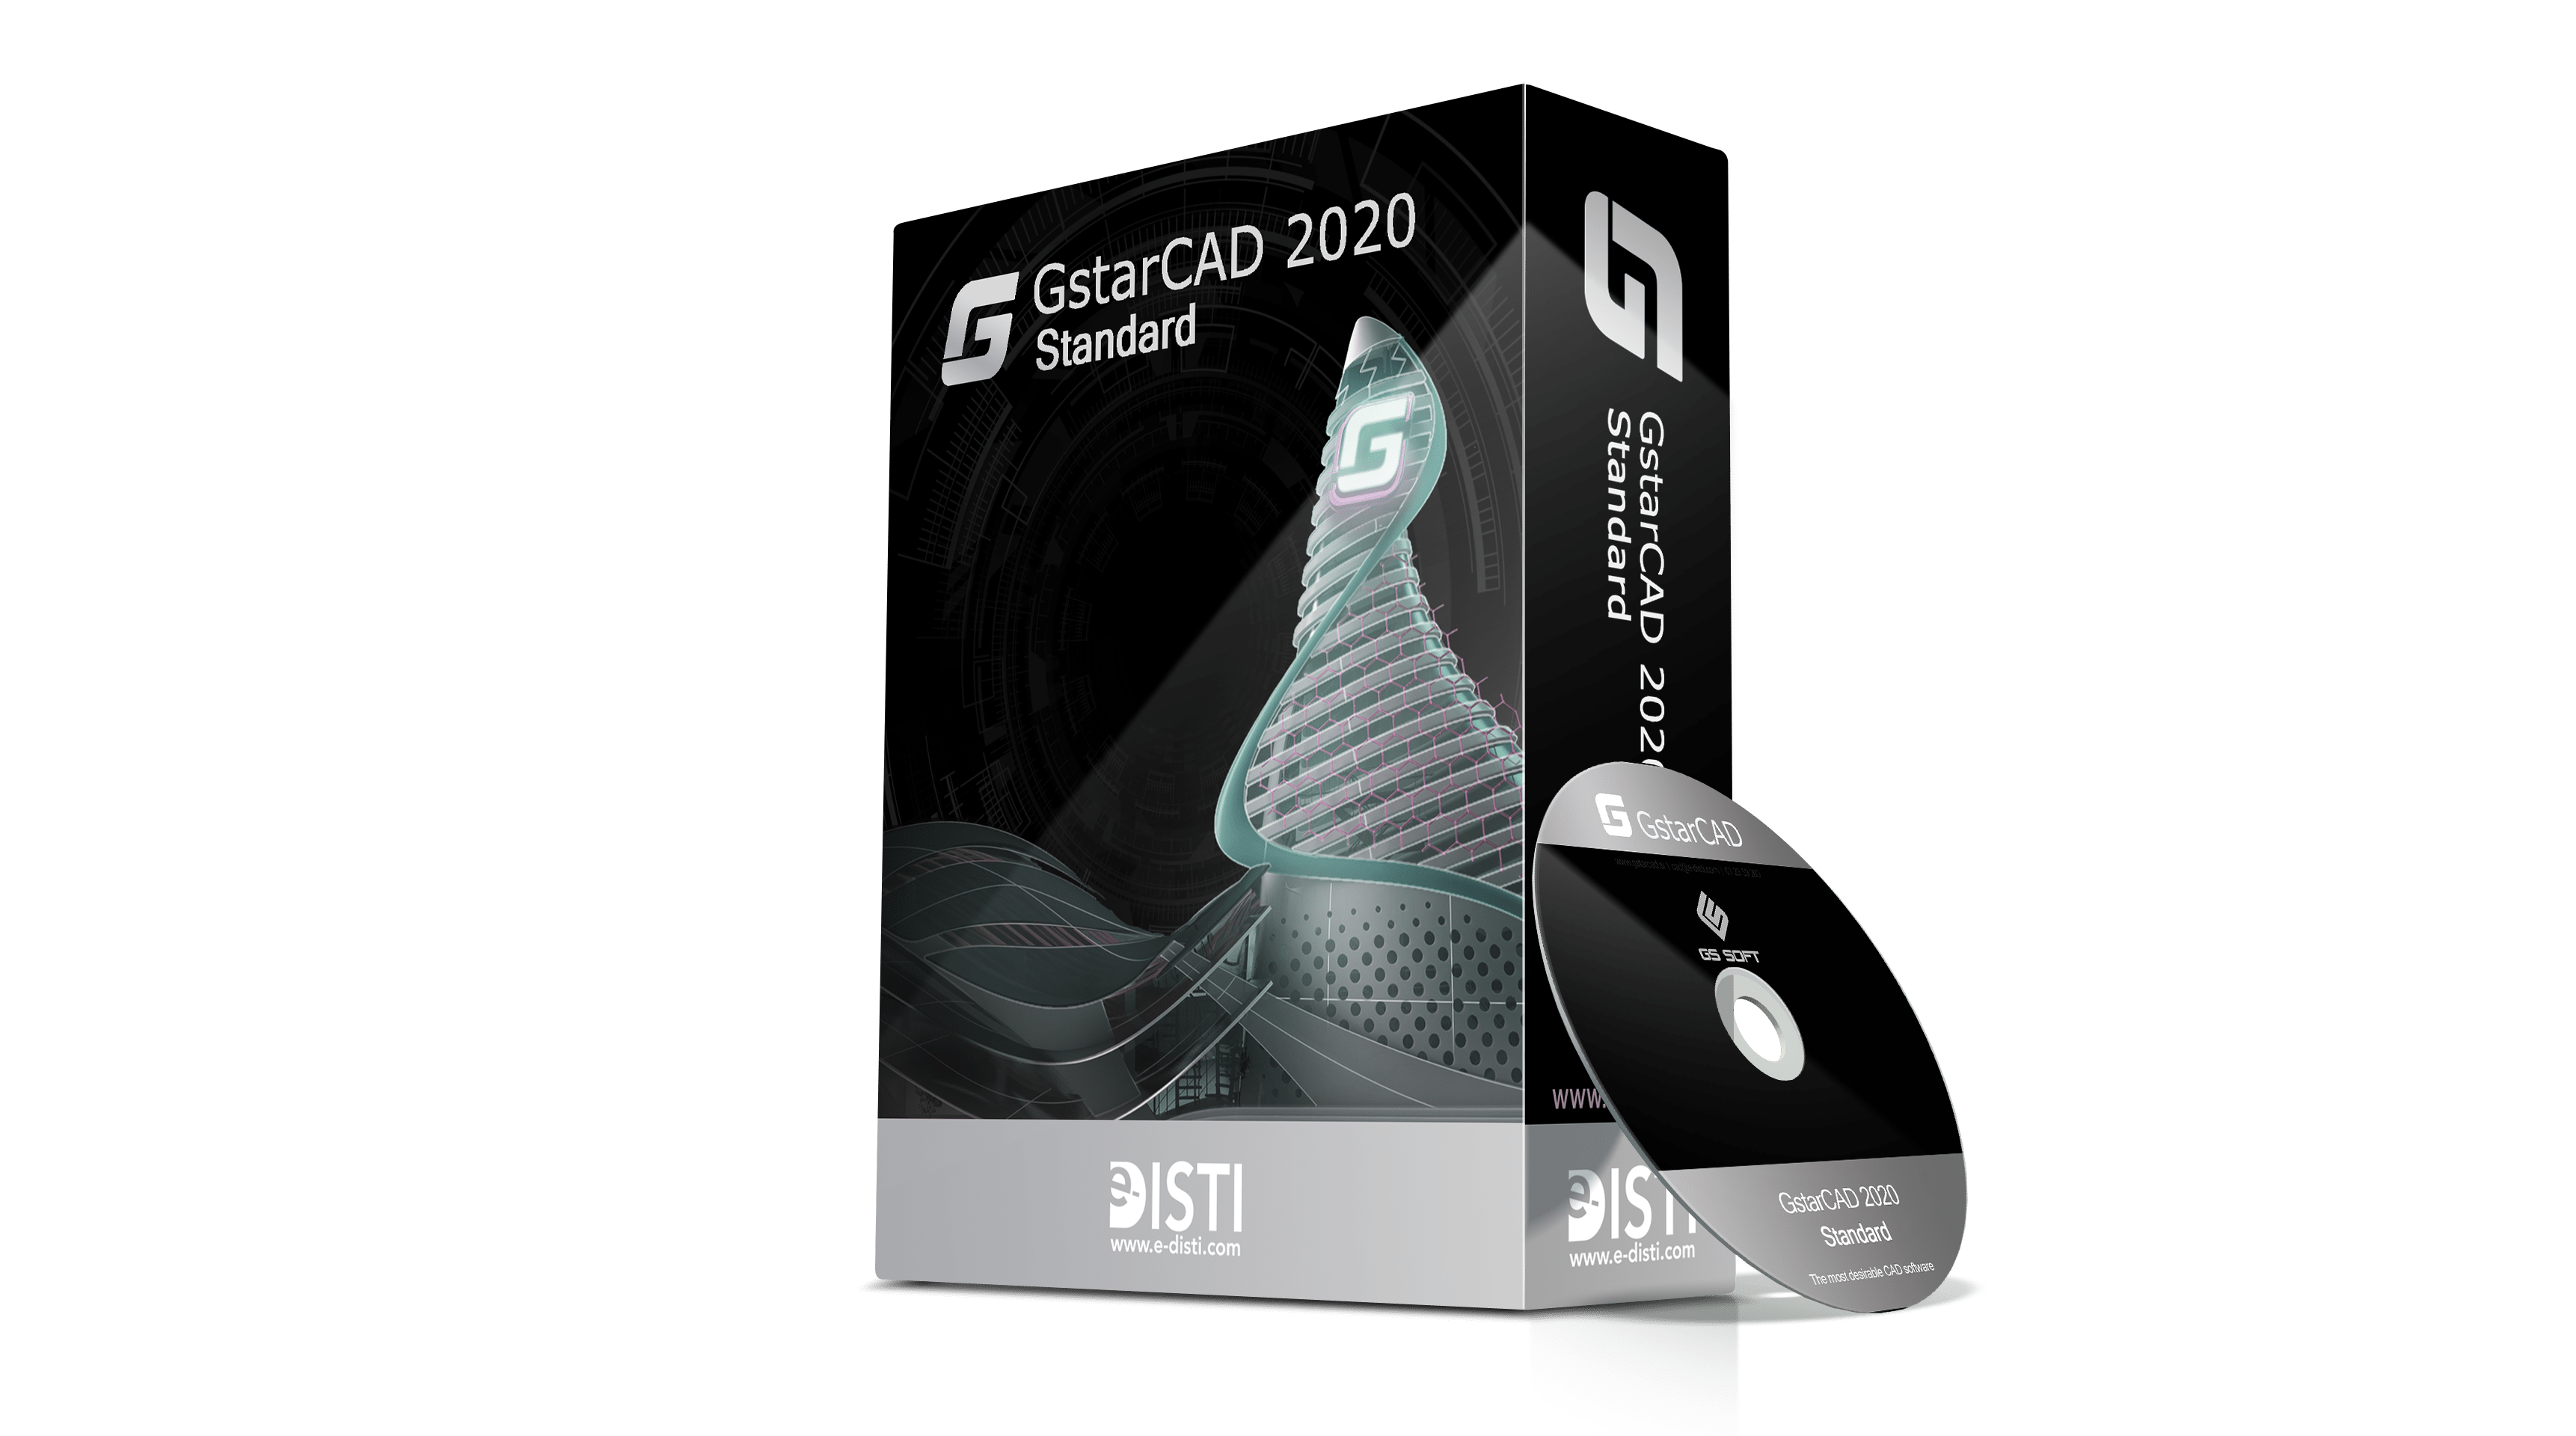 GstarCAD standard CD box E disti